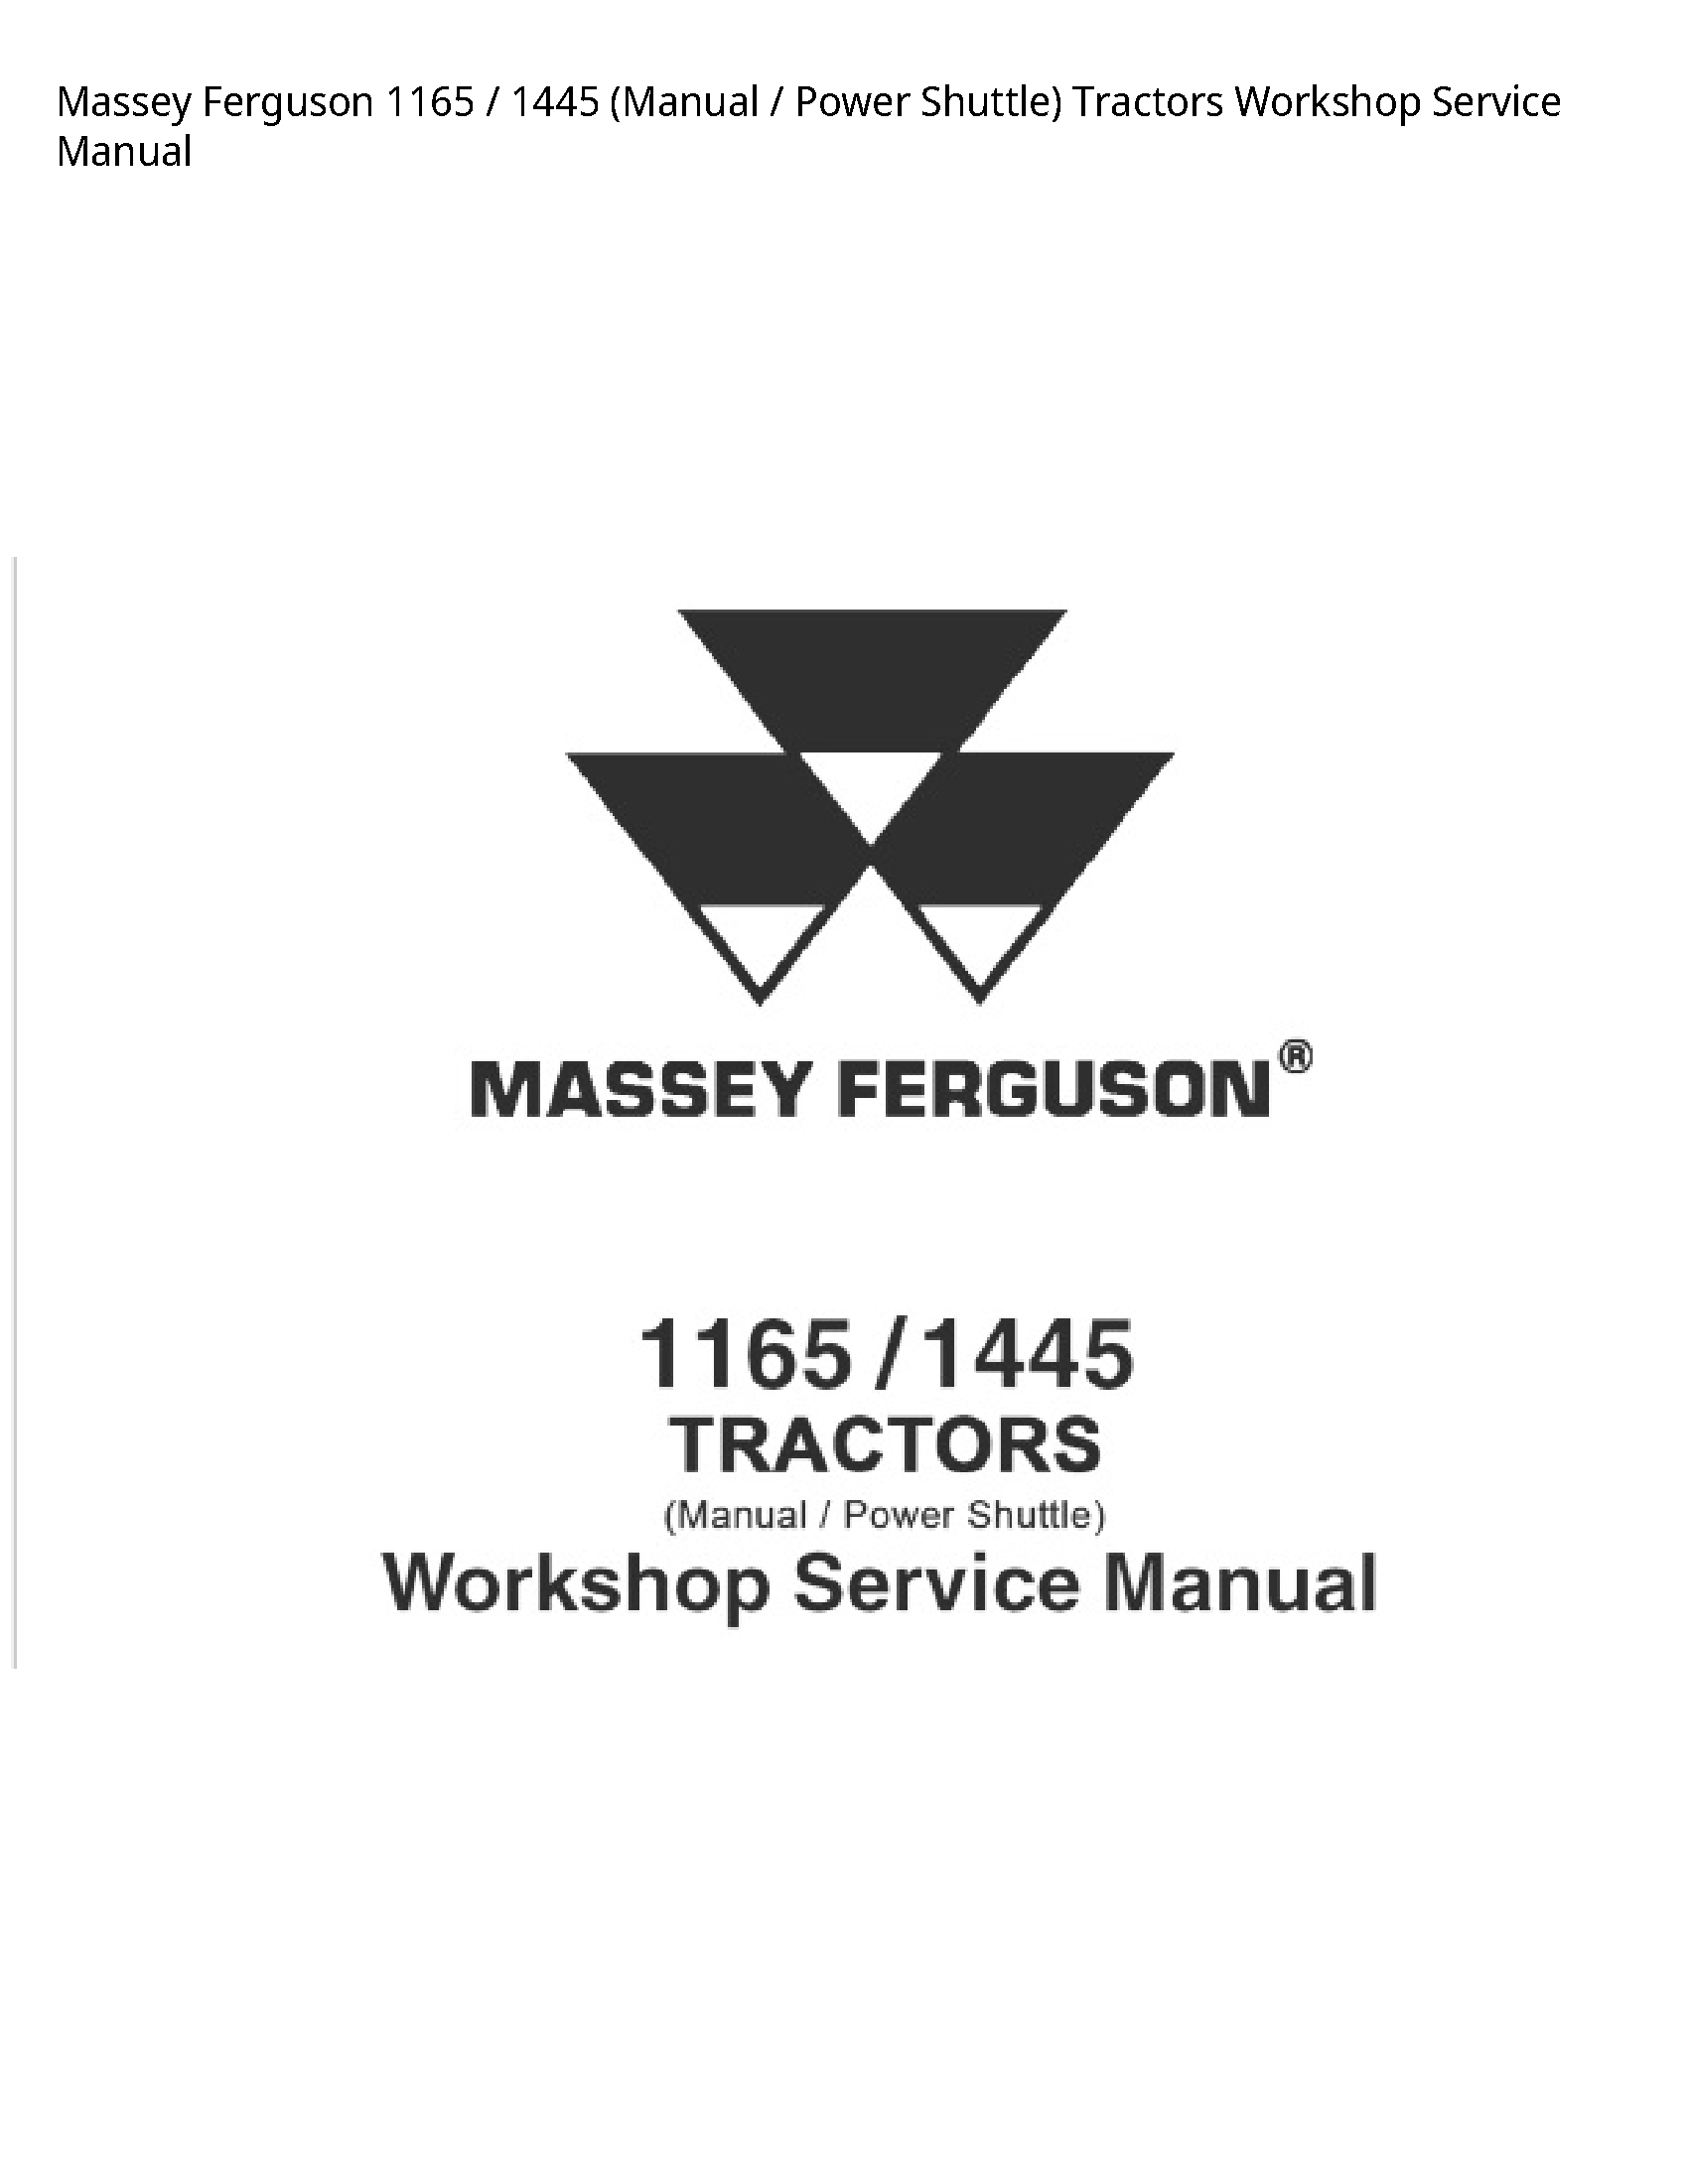 Massey Ferguson 1165  manual